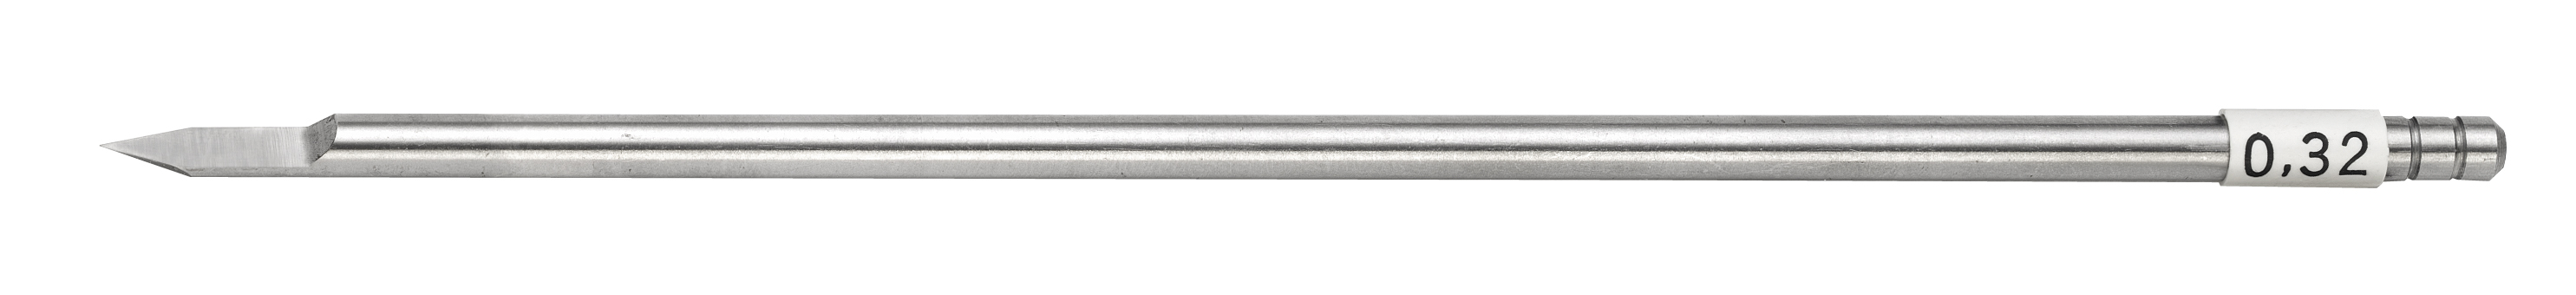 WS-Fräser Schaft-Ø 3,17 mm Breite 0,32 mm Gravograph